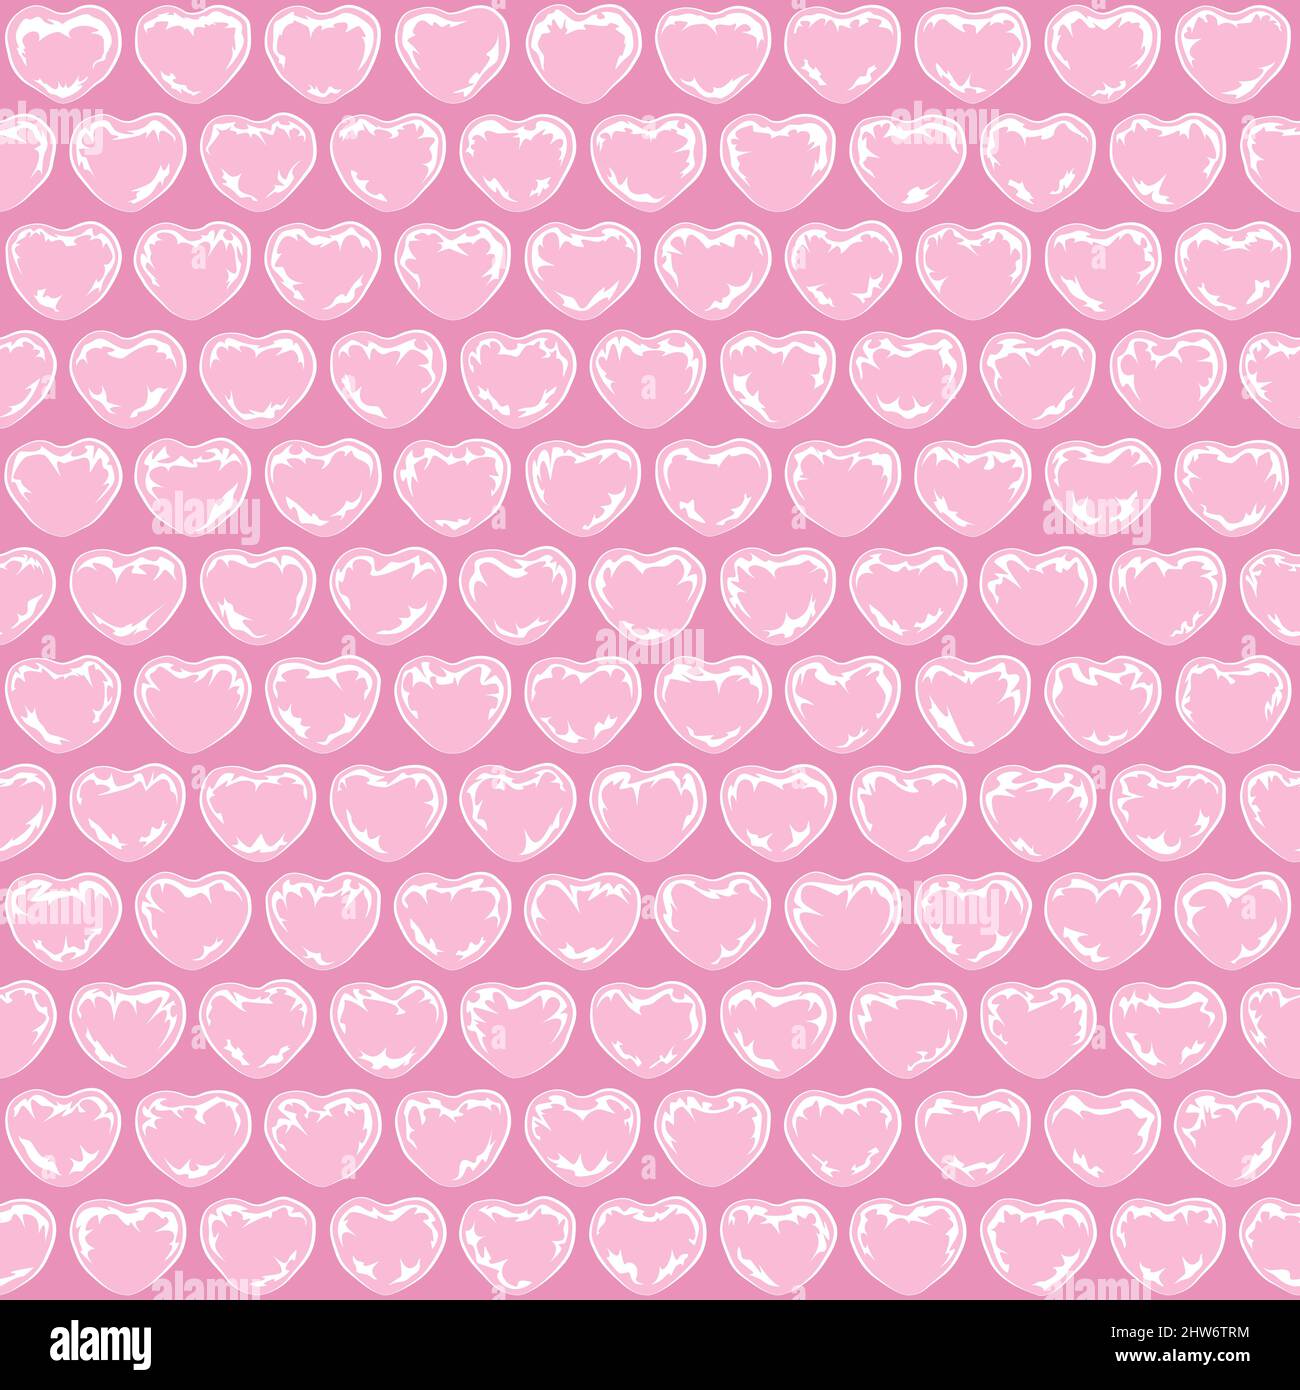 Hot Pink Transparent Heart Bubble Wrap Sheet